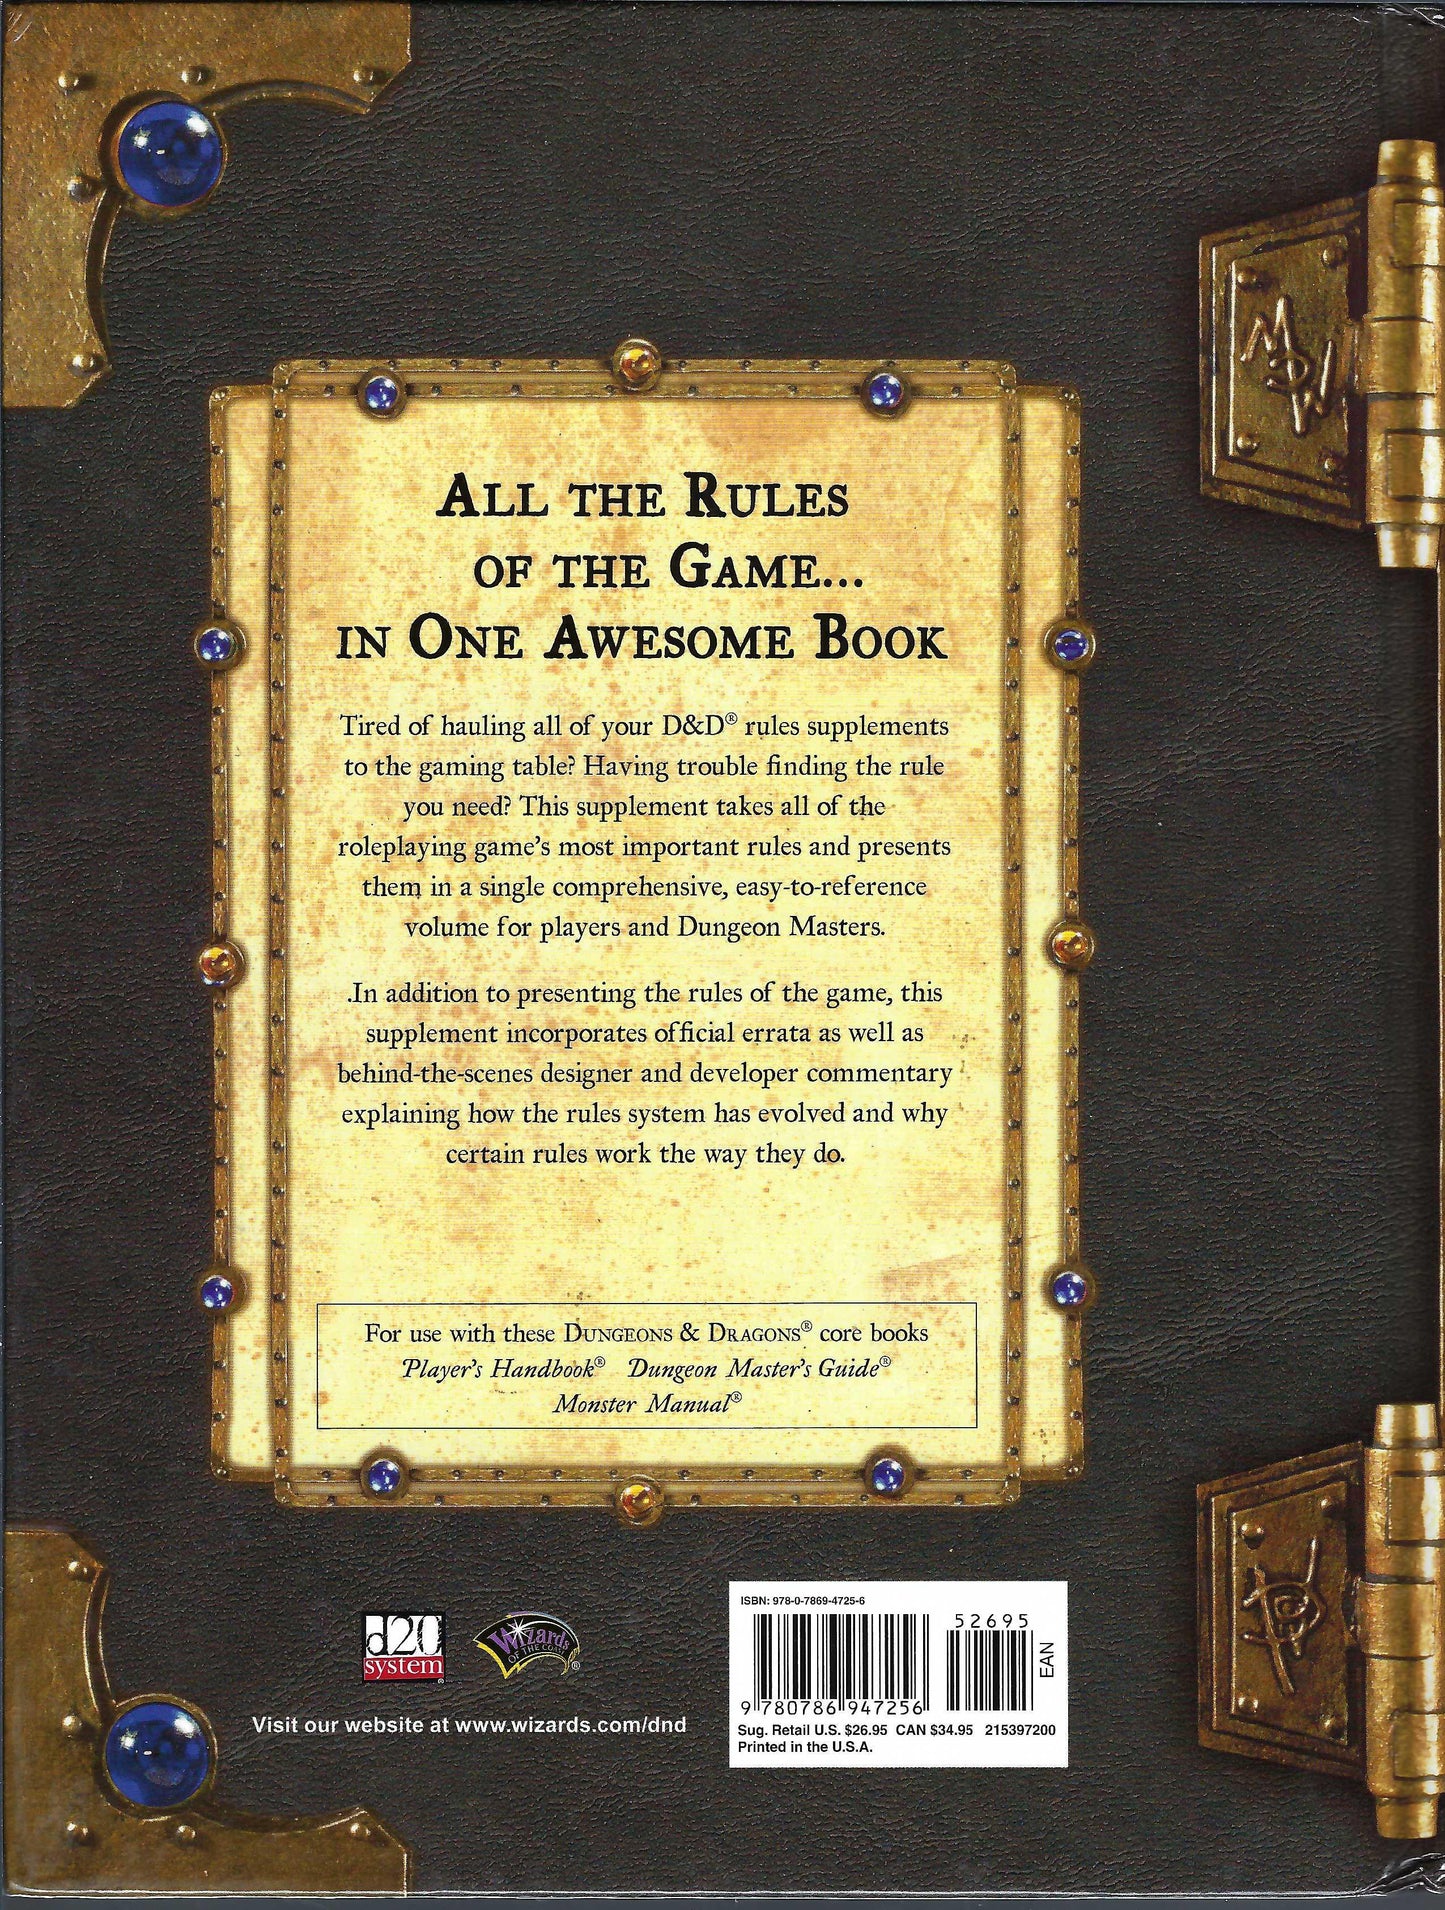 Rules Compendium back cover